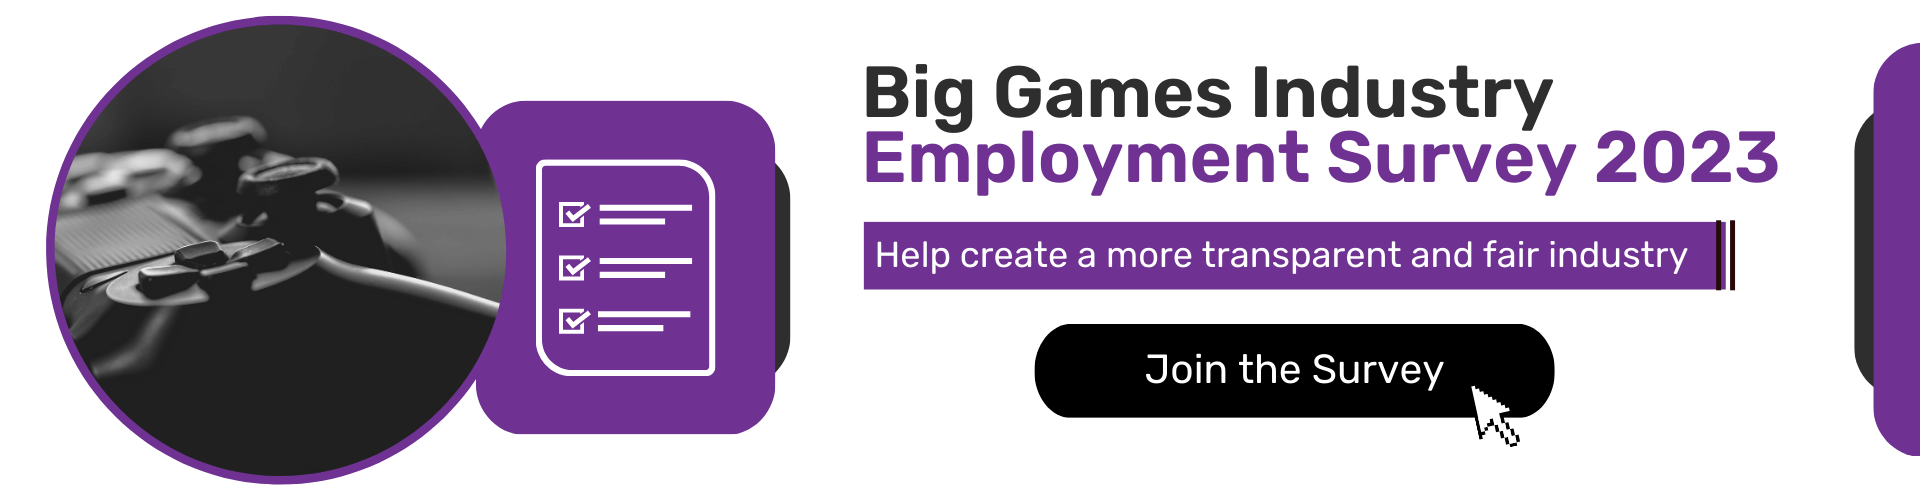 Big_Games_Industry_Employment_Survey_2023